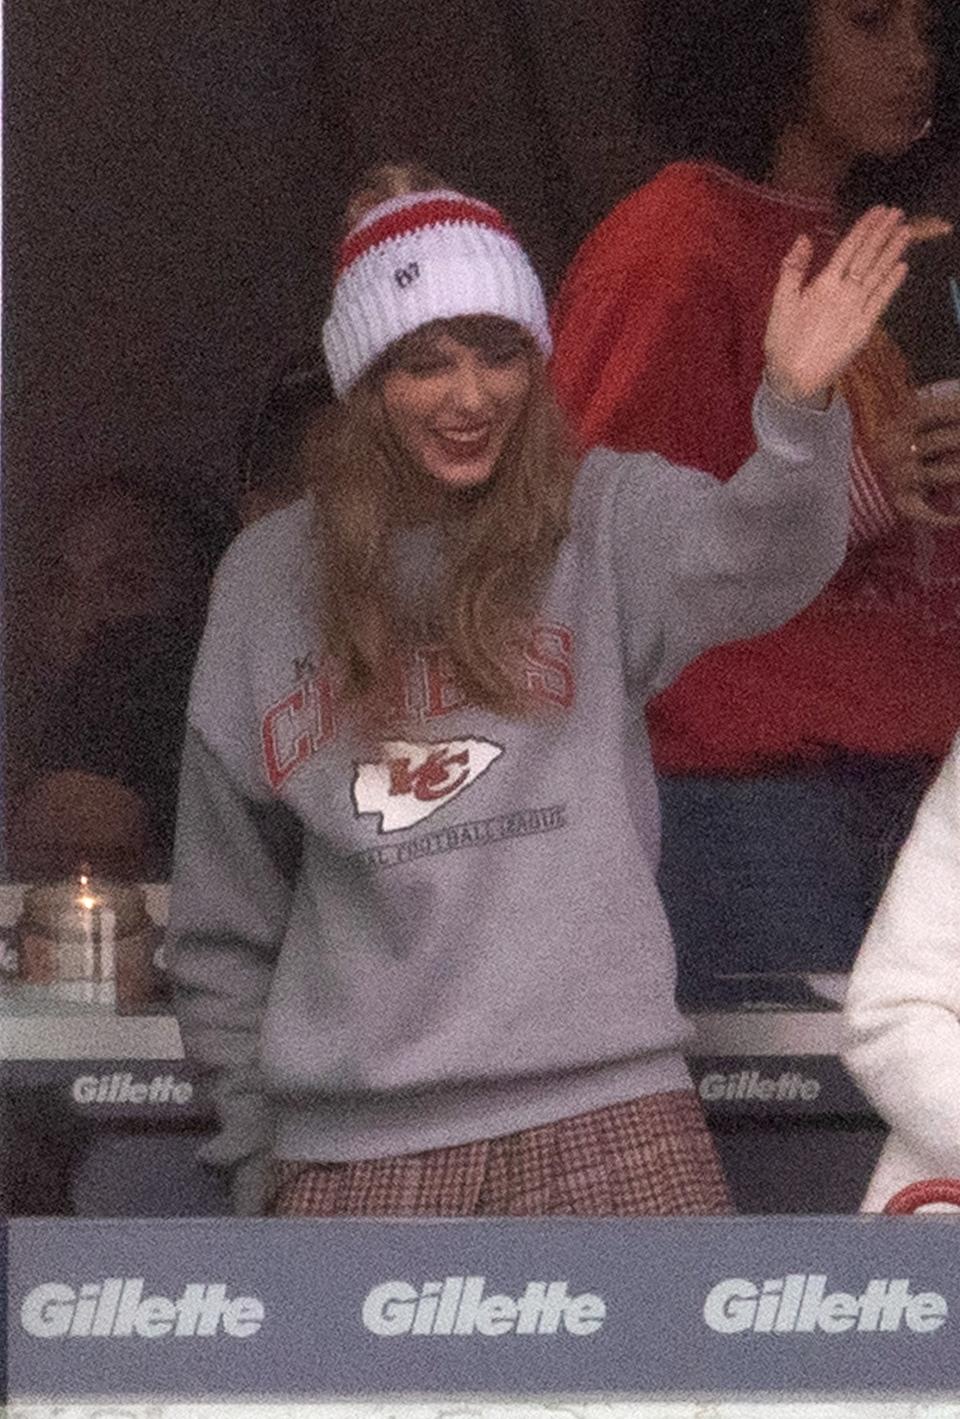 Taylor Swift waving